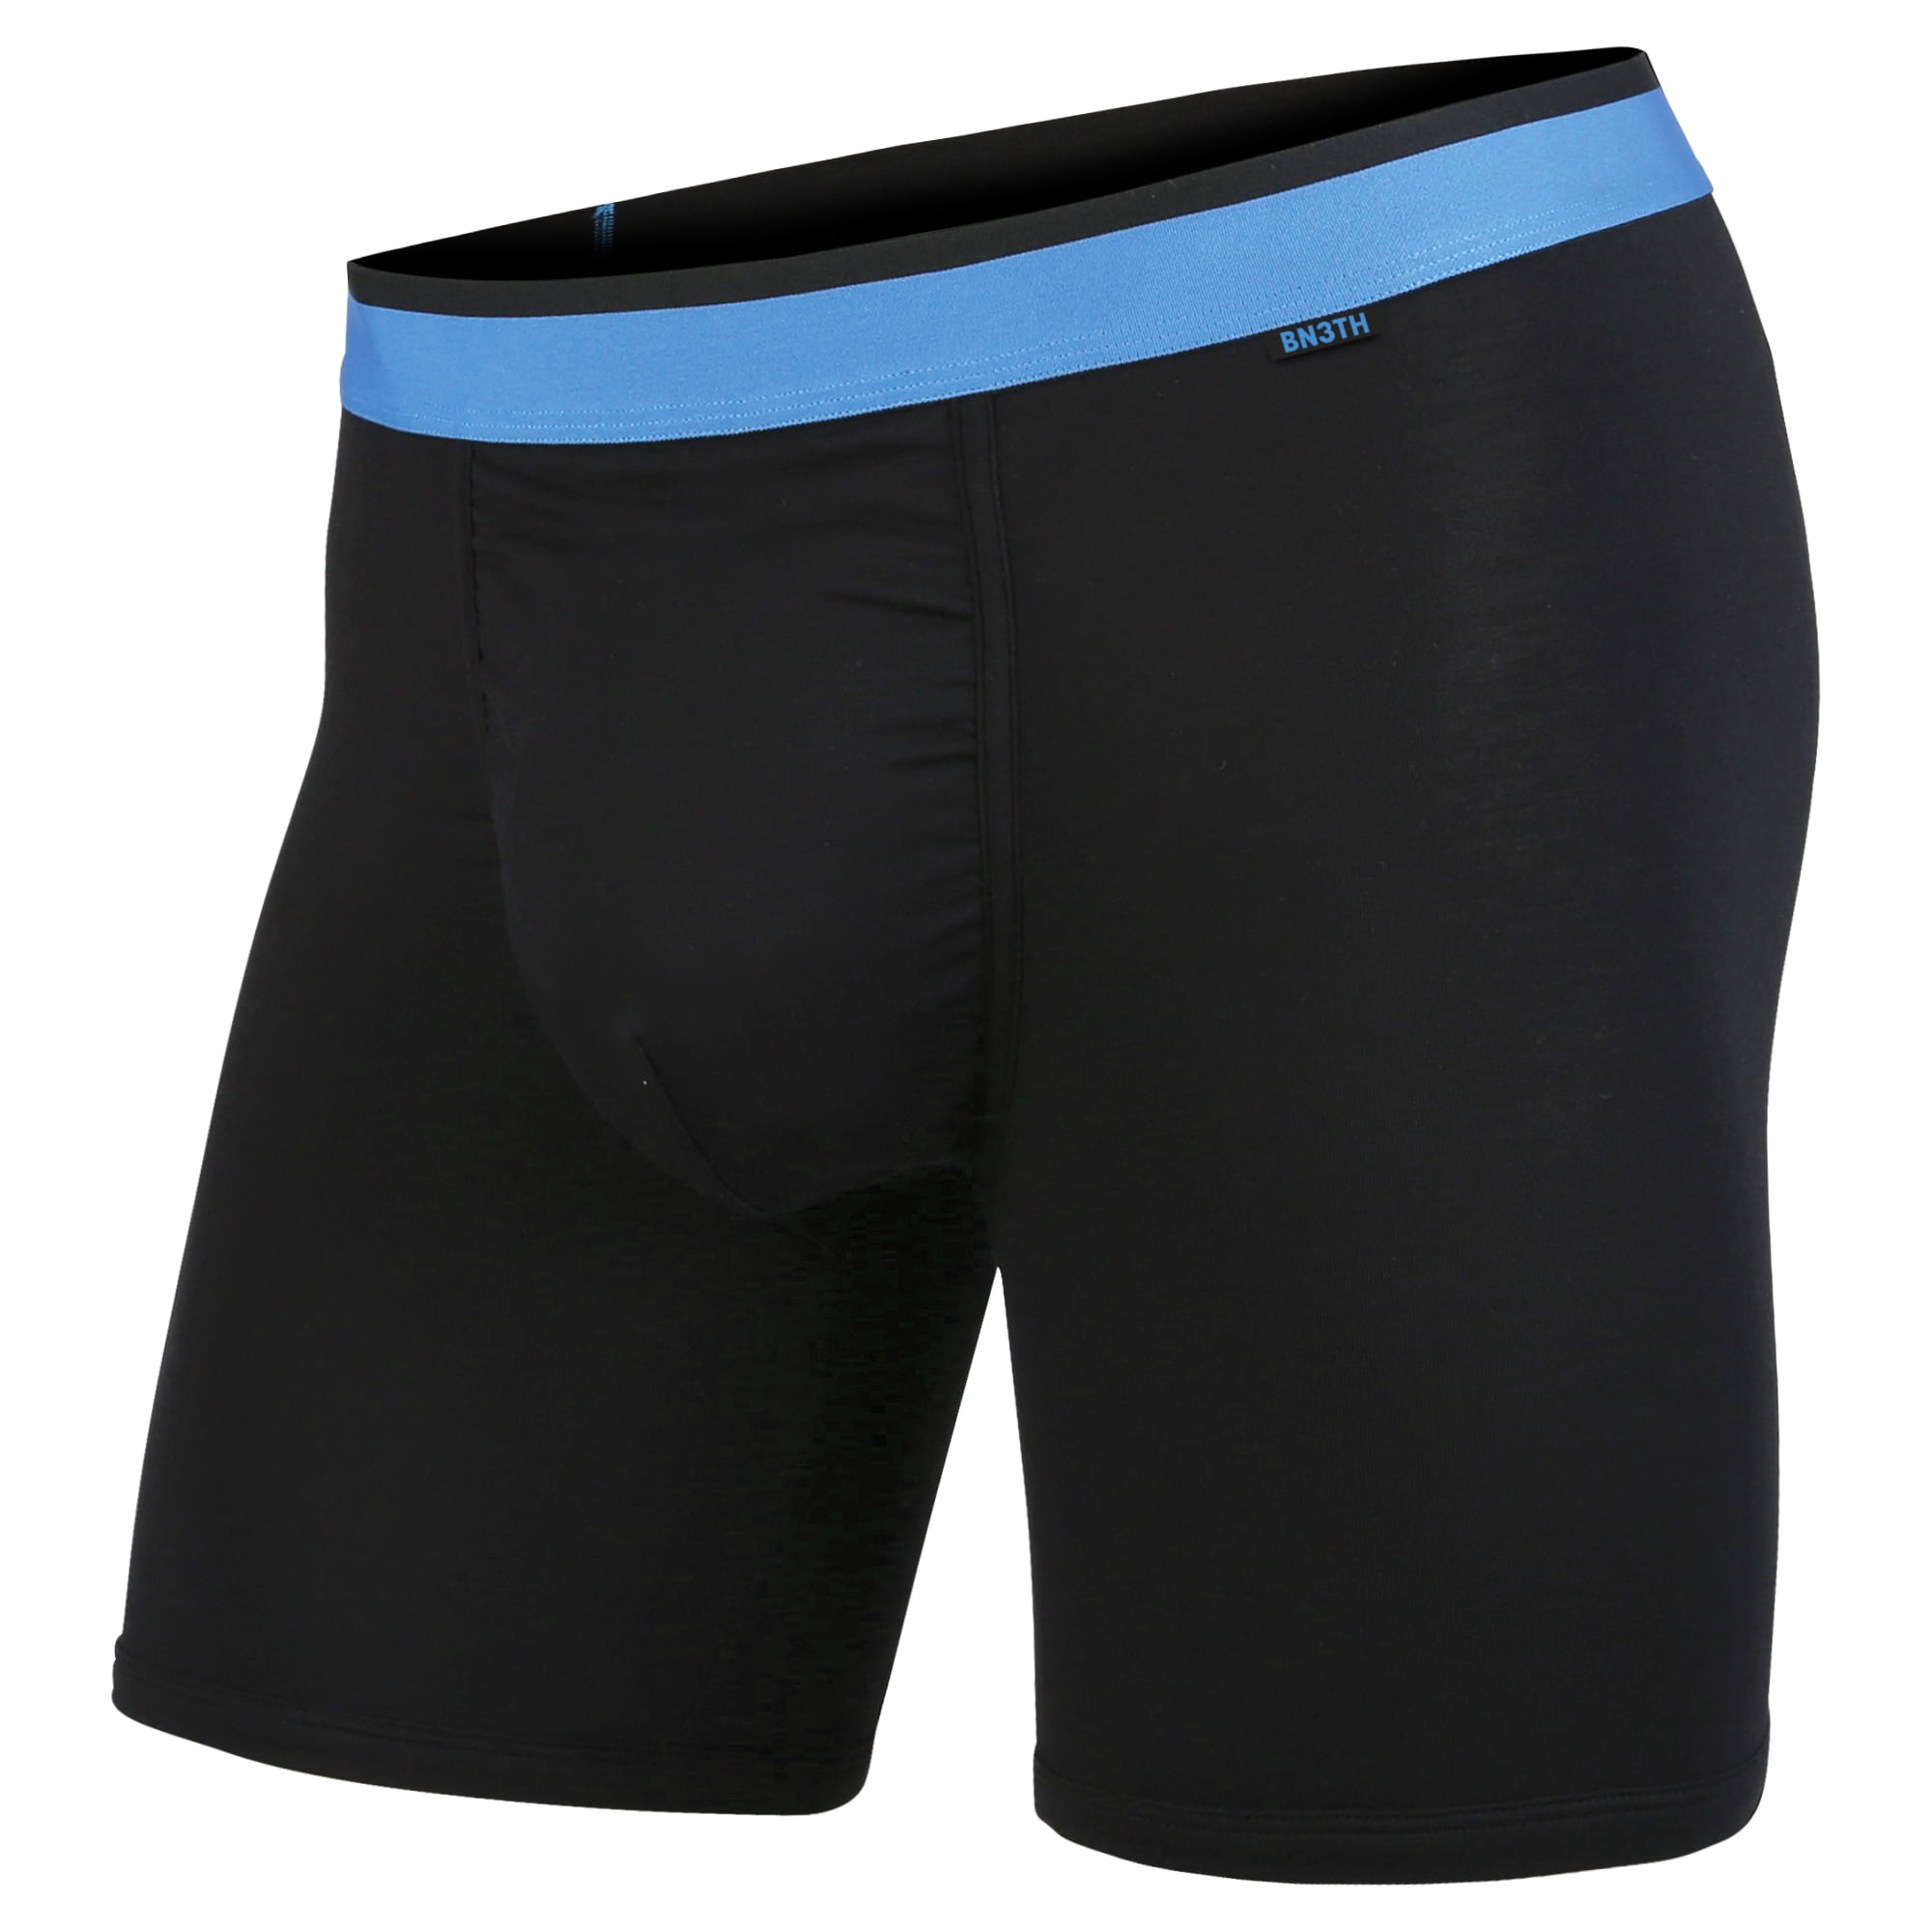 BN3TH Men's Classic Boxer Brief Underwear 3-dimensional Pouch (Black/Blue,  S) 